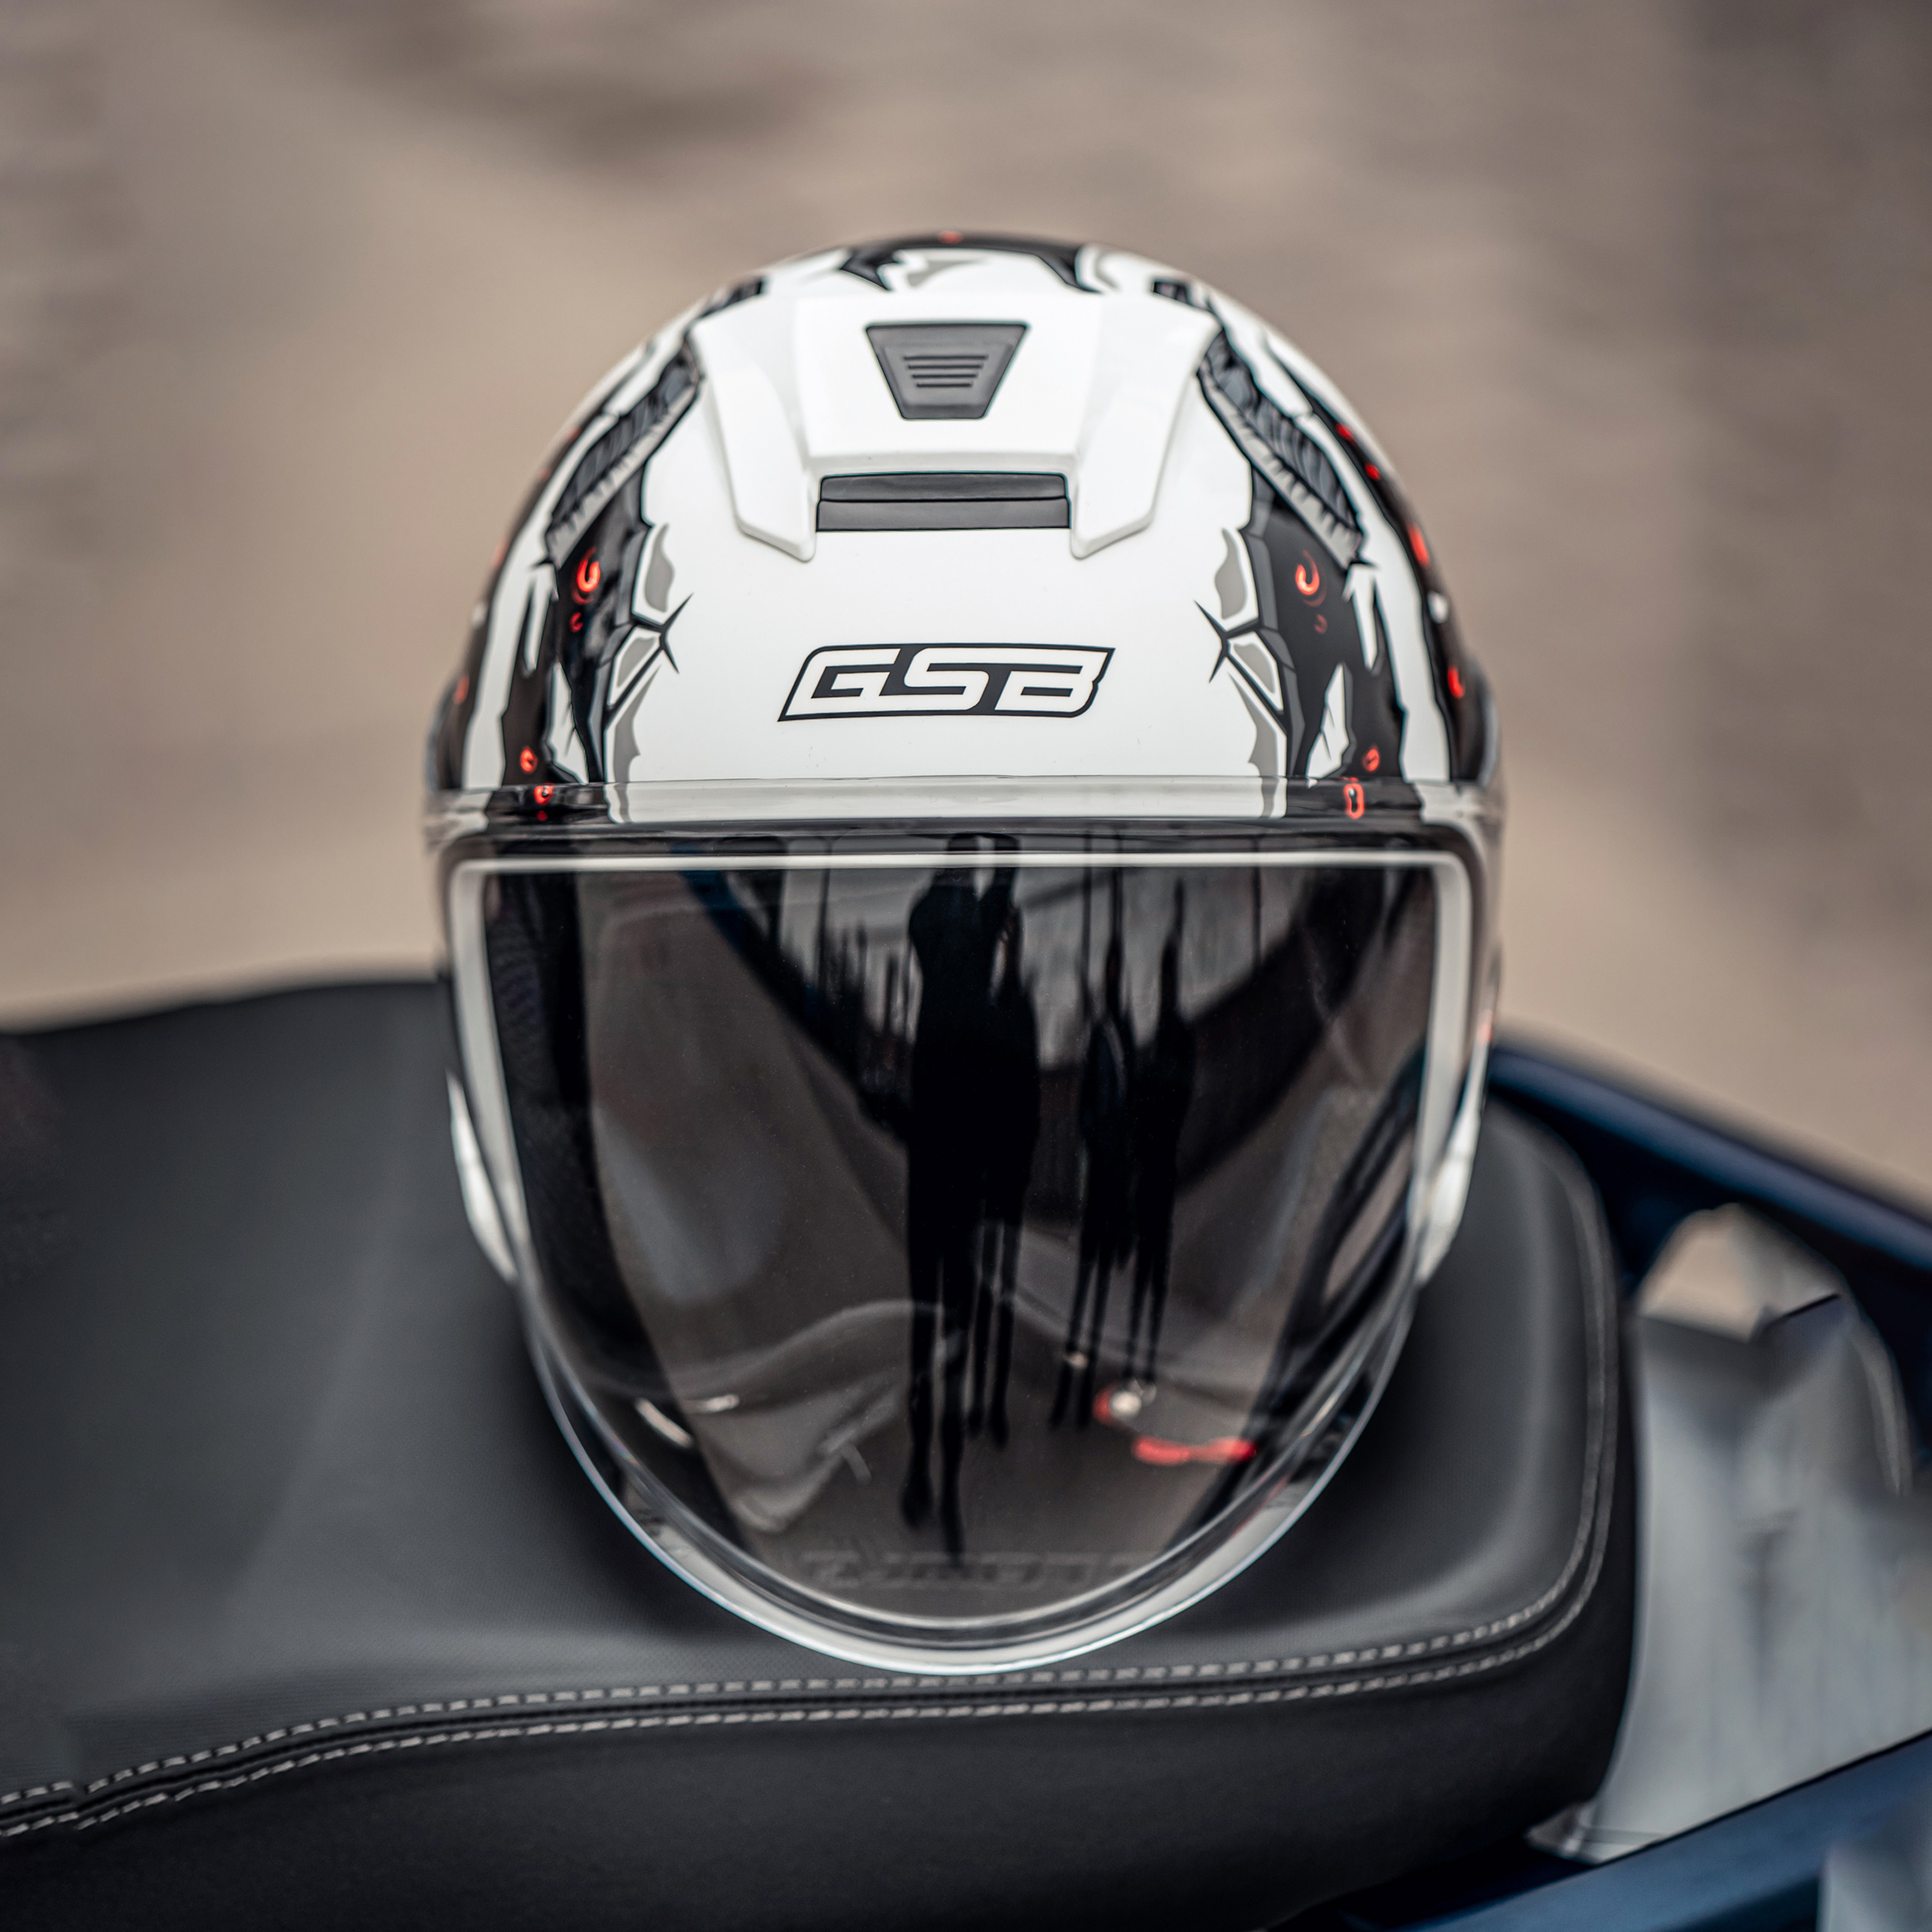 gsb头盔夏季防晒半盔男摩托车四分之三头盔女复古4分之3盔gsb268